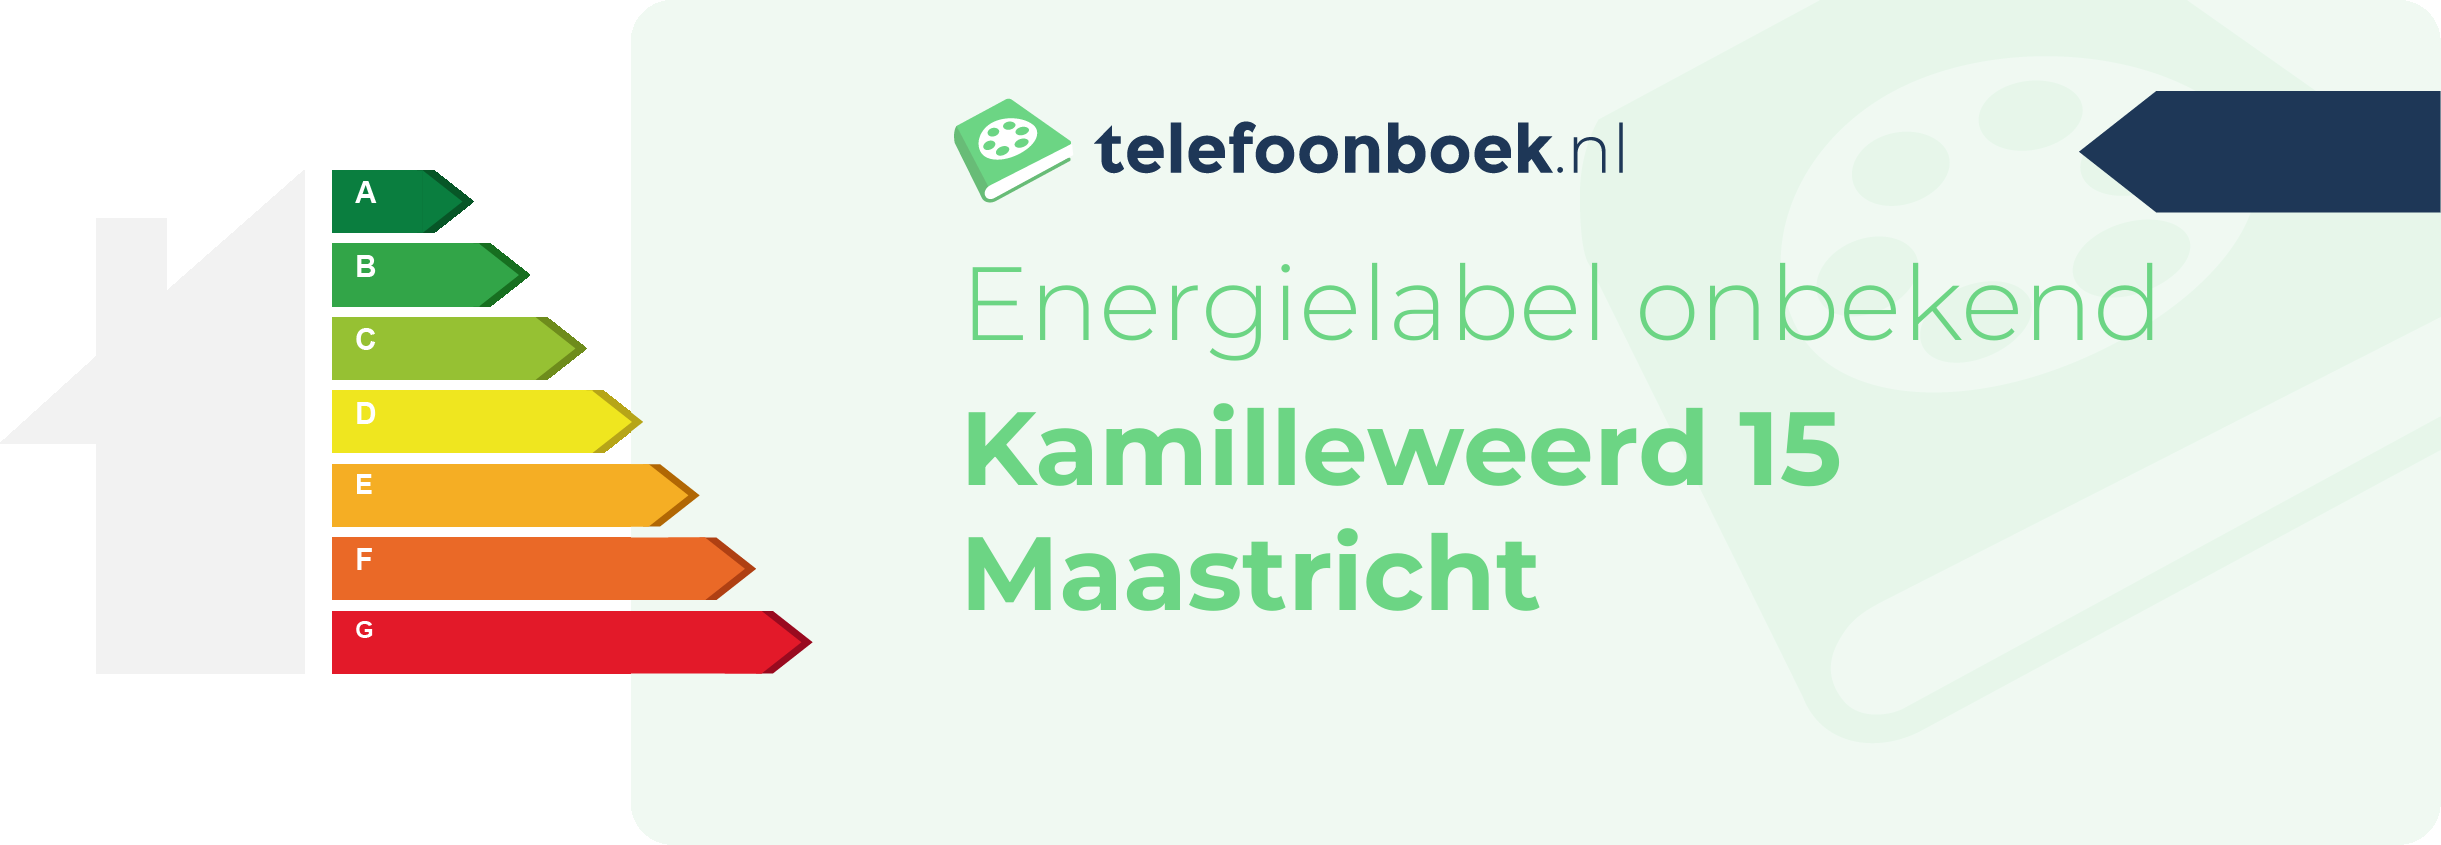 Energielabel Kamilleweerd 15 Maastricht